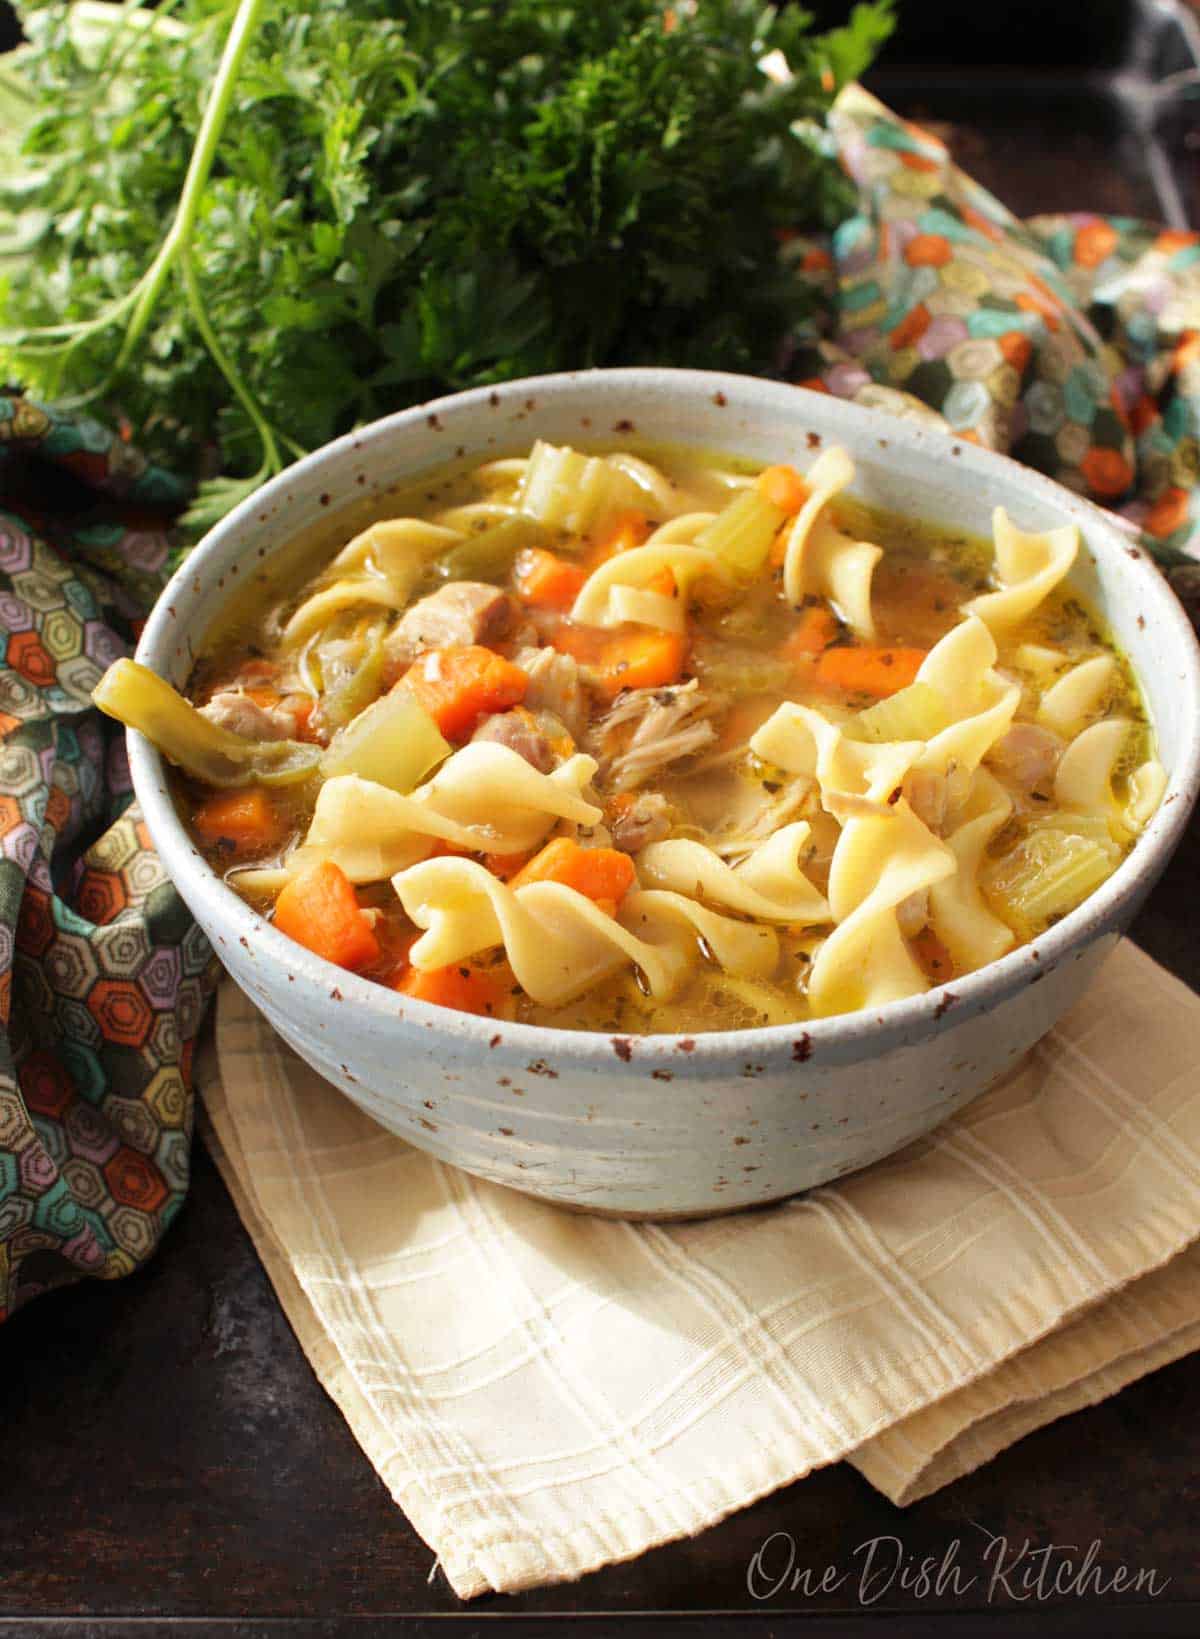 https://onedishkitchen.com/wp-content/uploads/2019/10/instant-pot-chicken-noodle-soup-1b.jpg